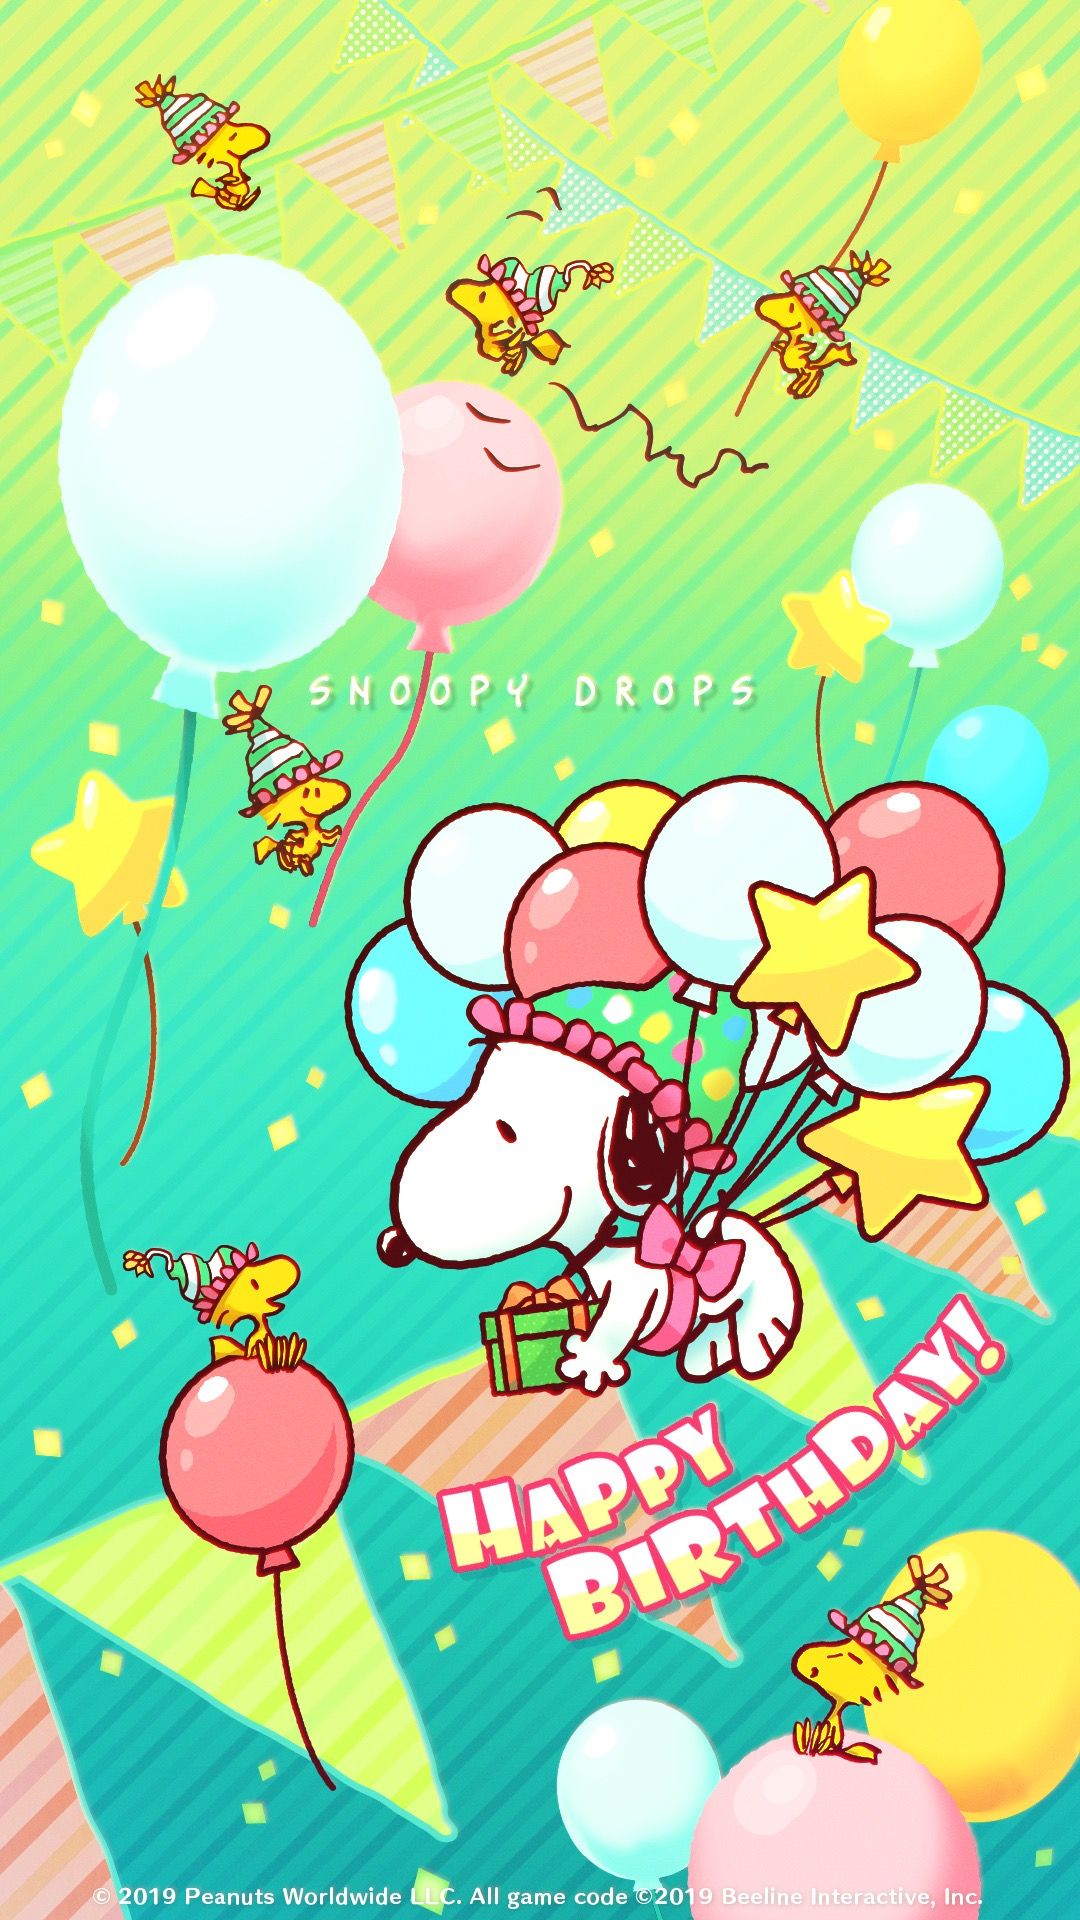 Snoopy birthday image